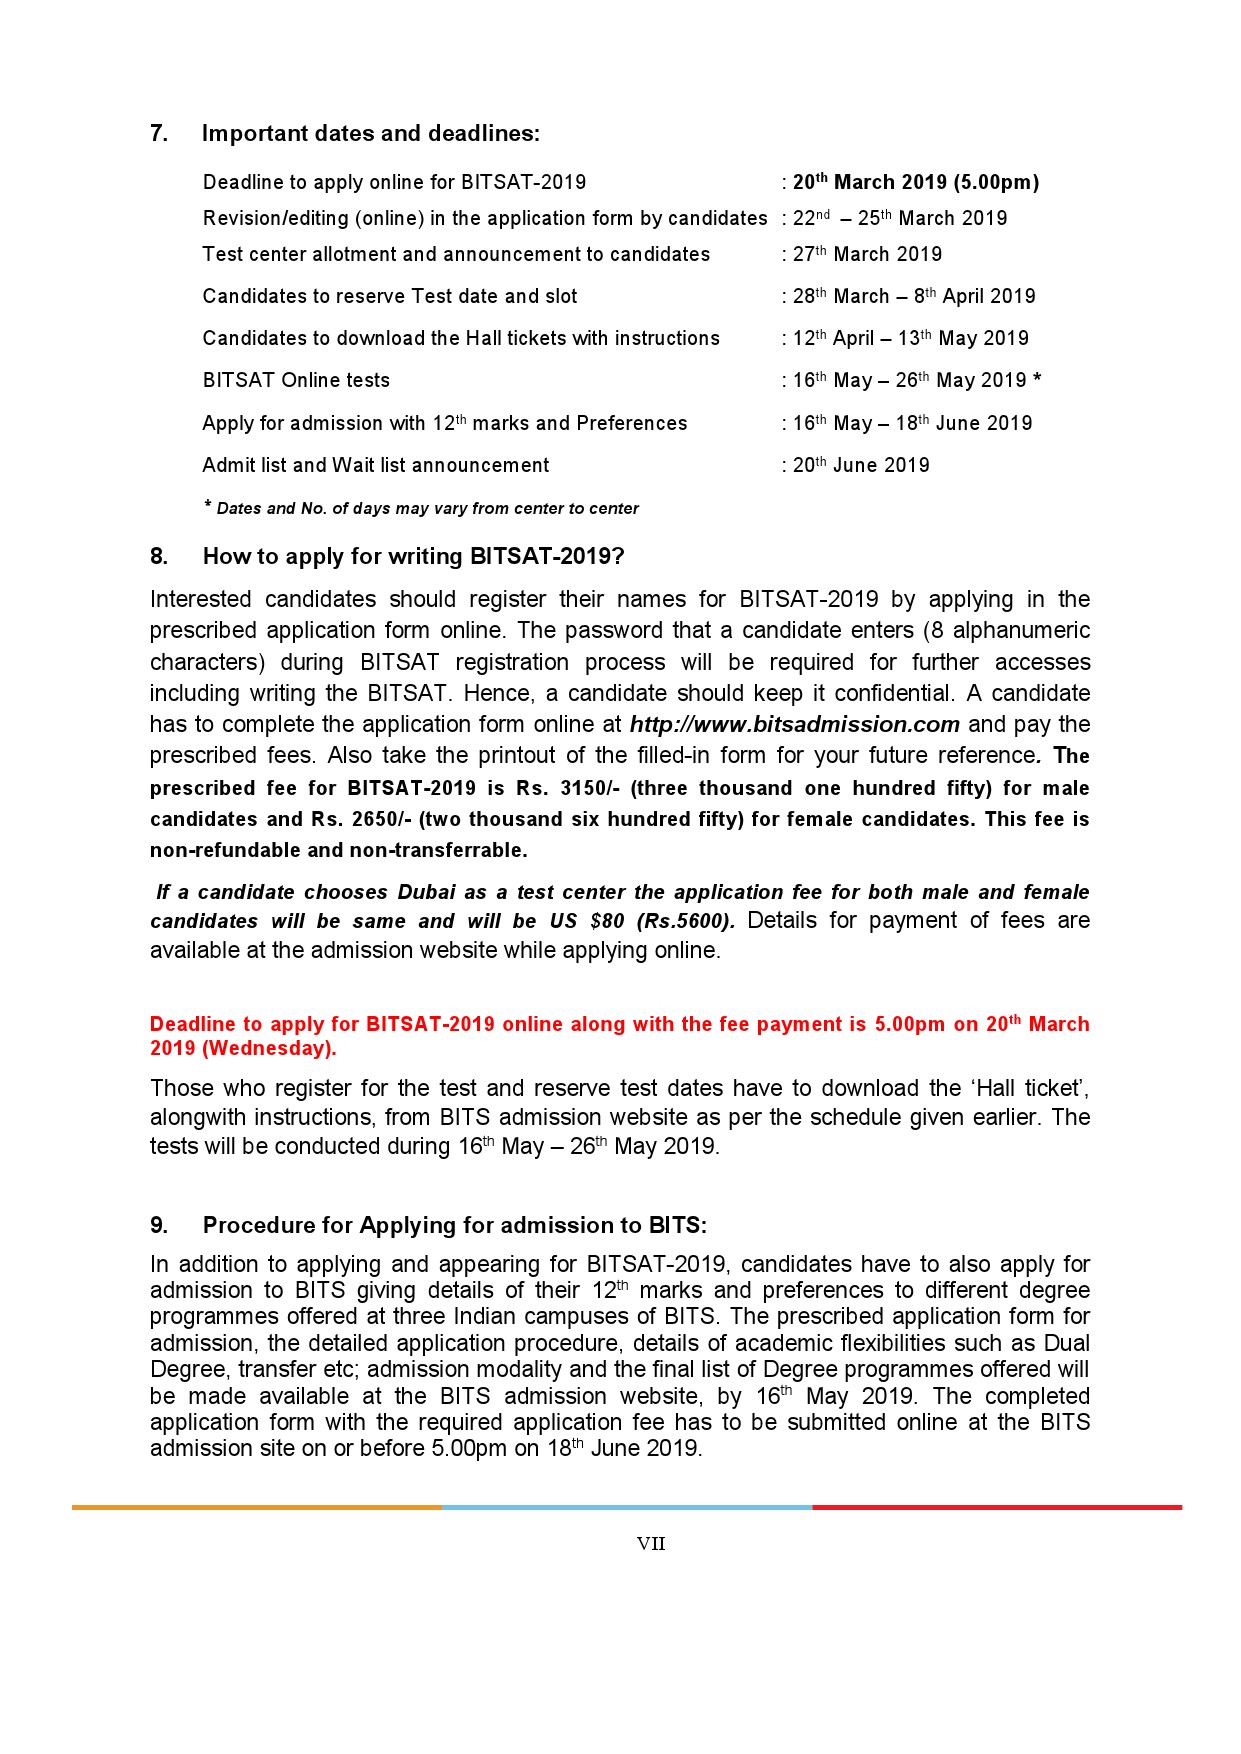 BITSAT 2019 Online Test Brochure - Notification Image 7